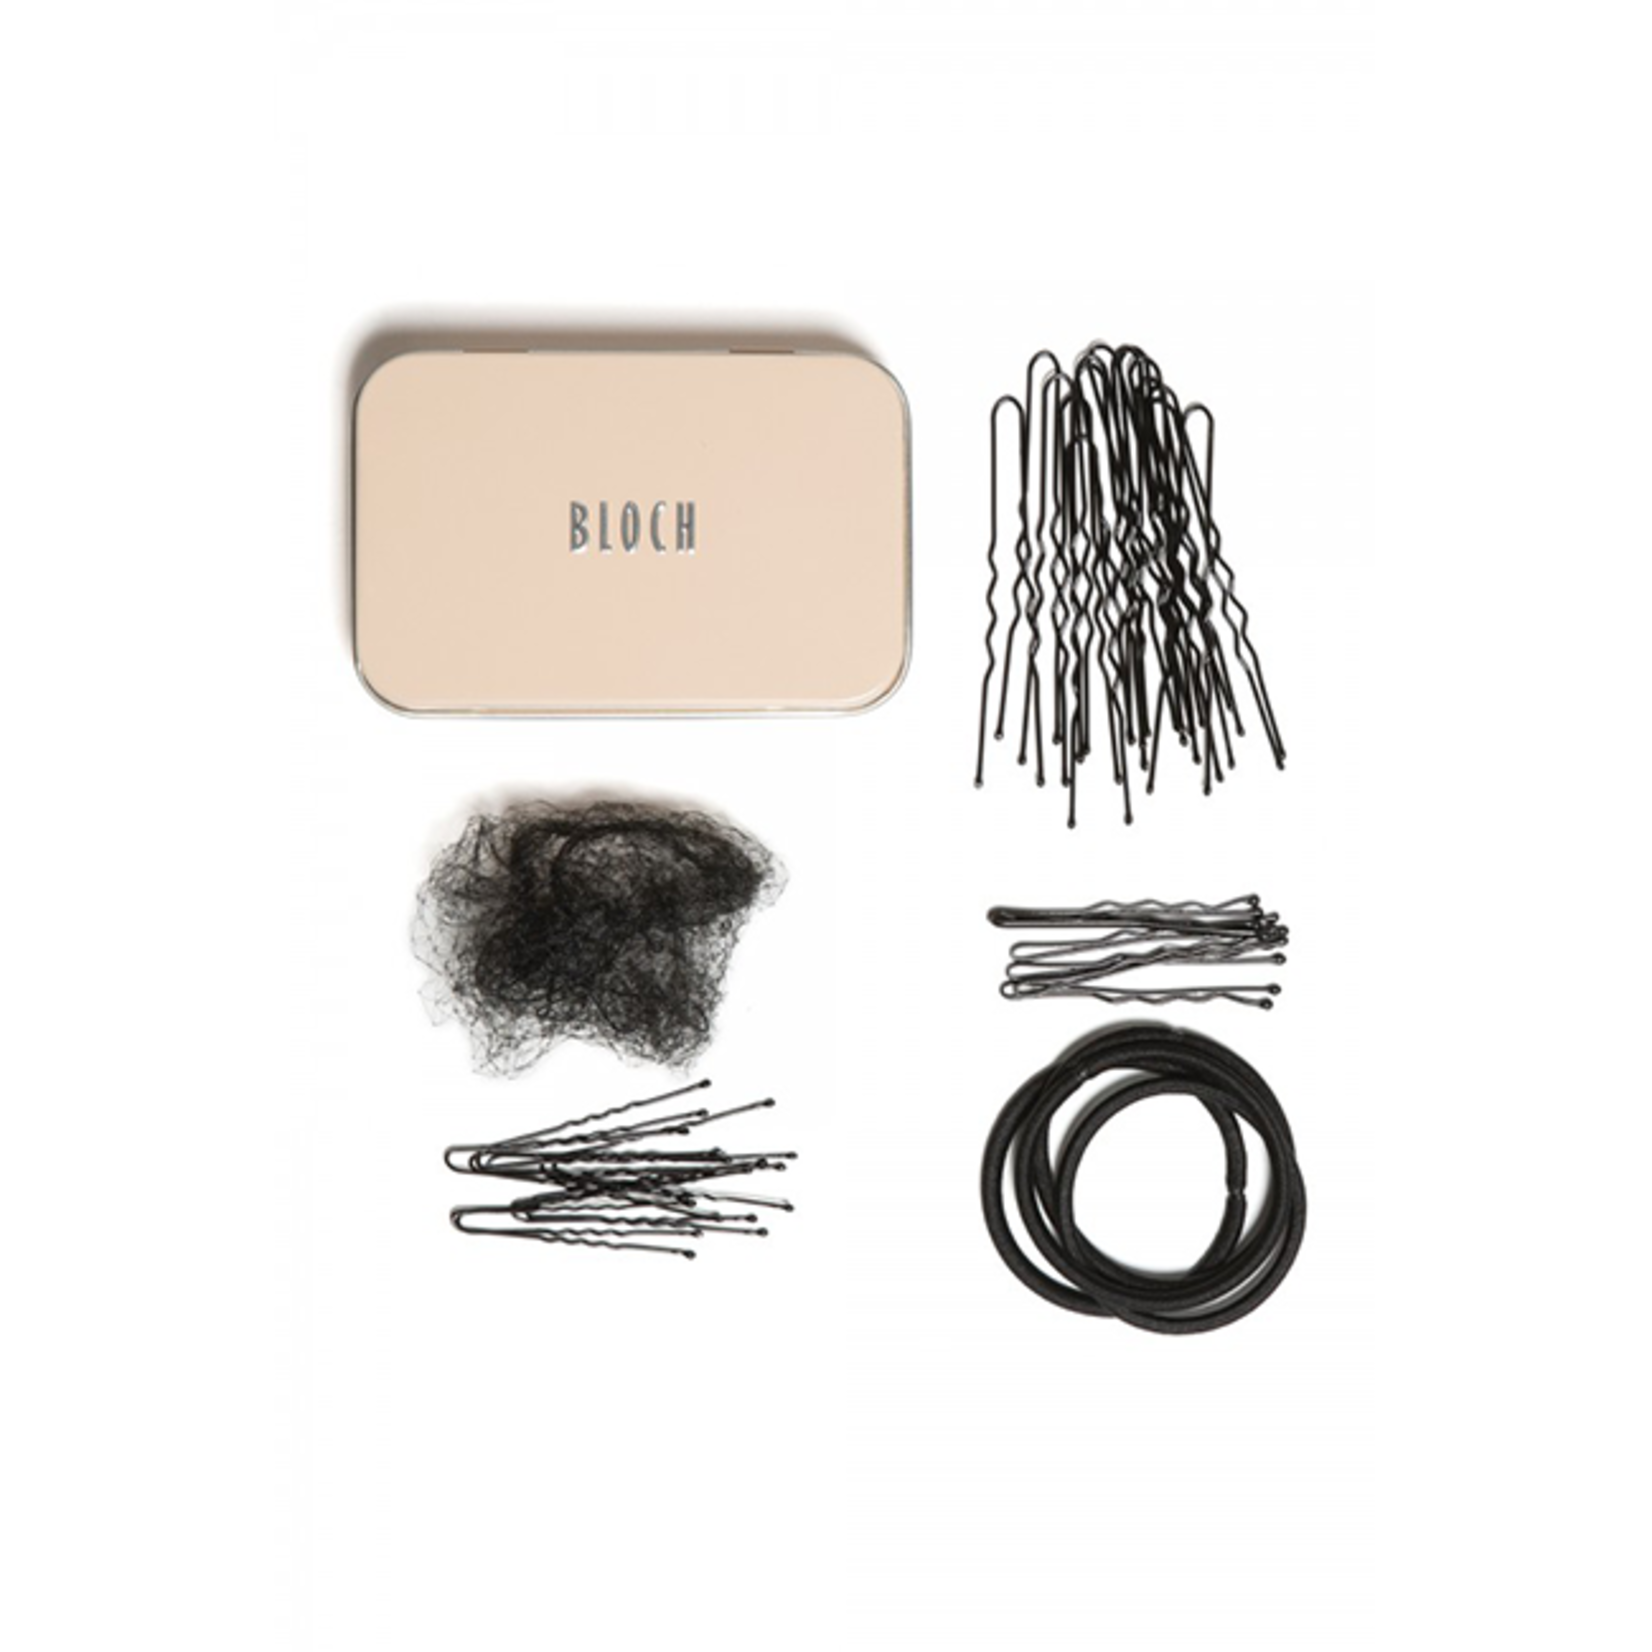 Bloch Bloch A0801 Hair Kit